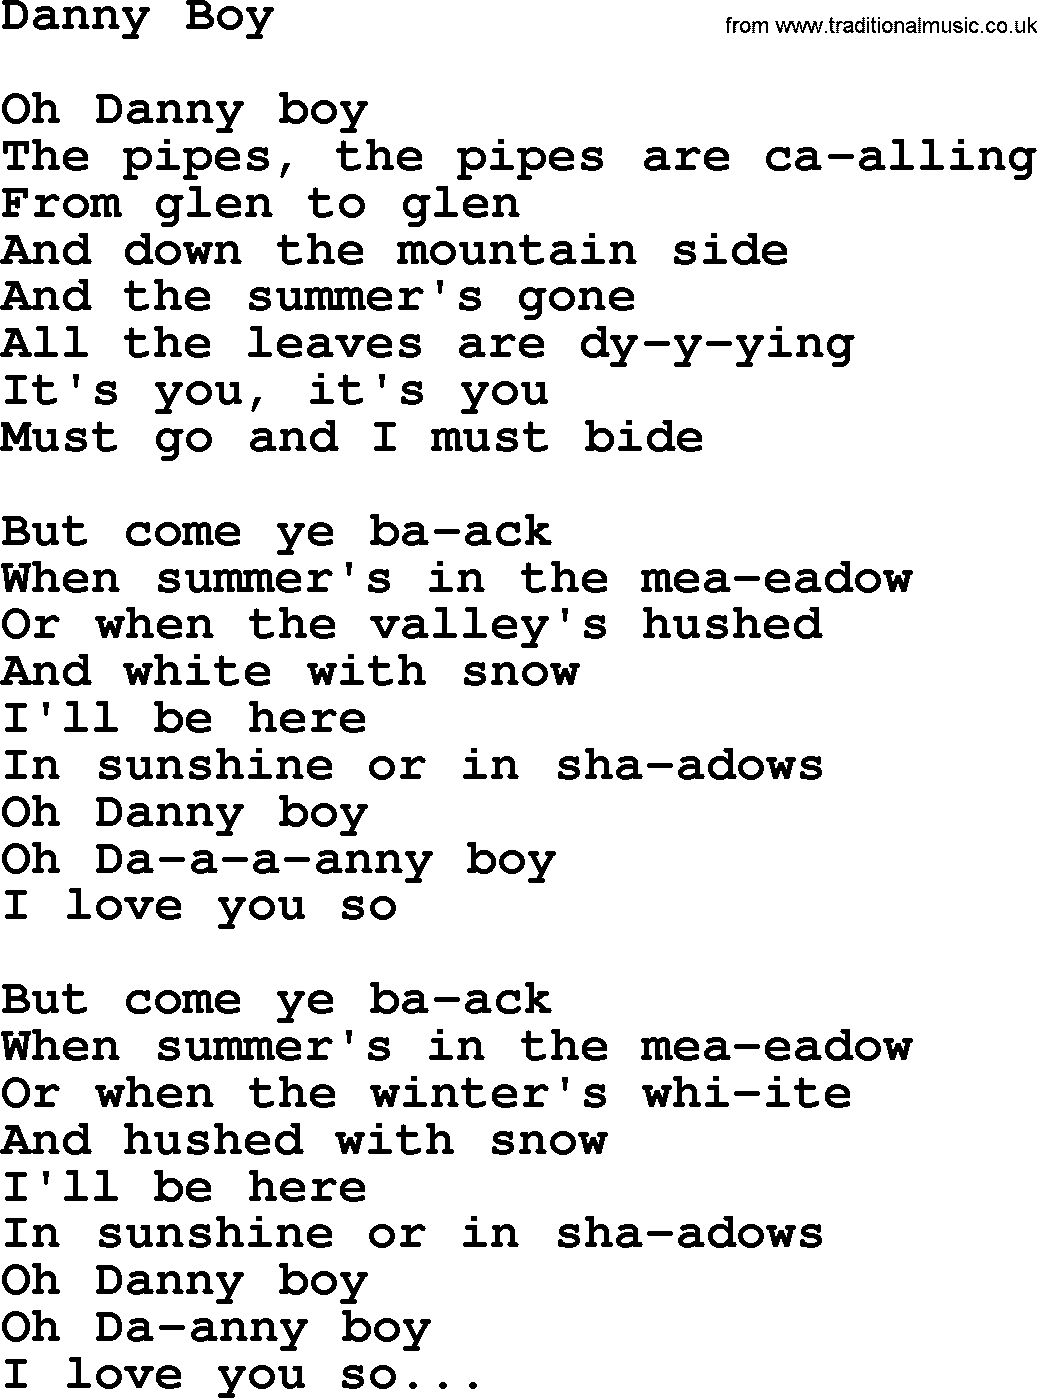 Willie Nelson song: Danny Boy lyrics